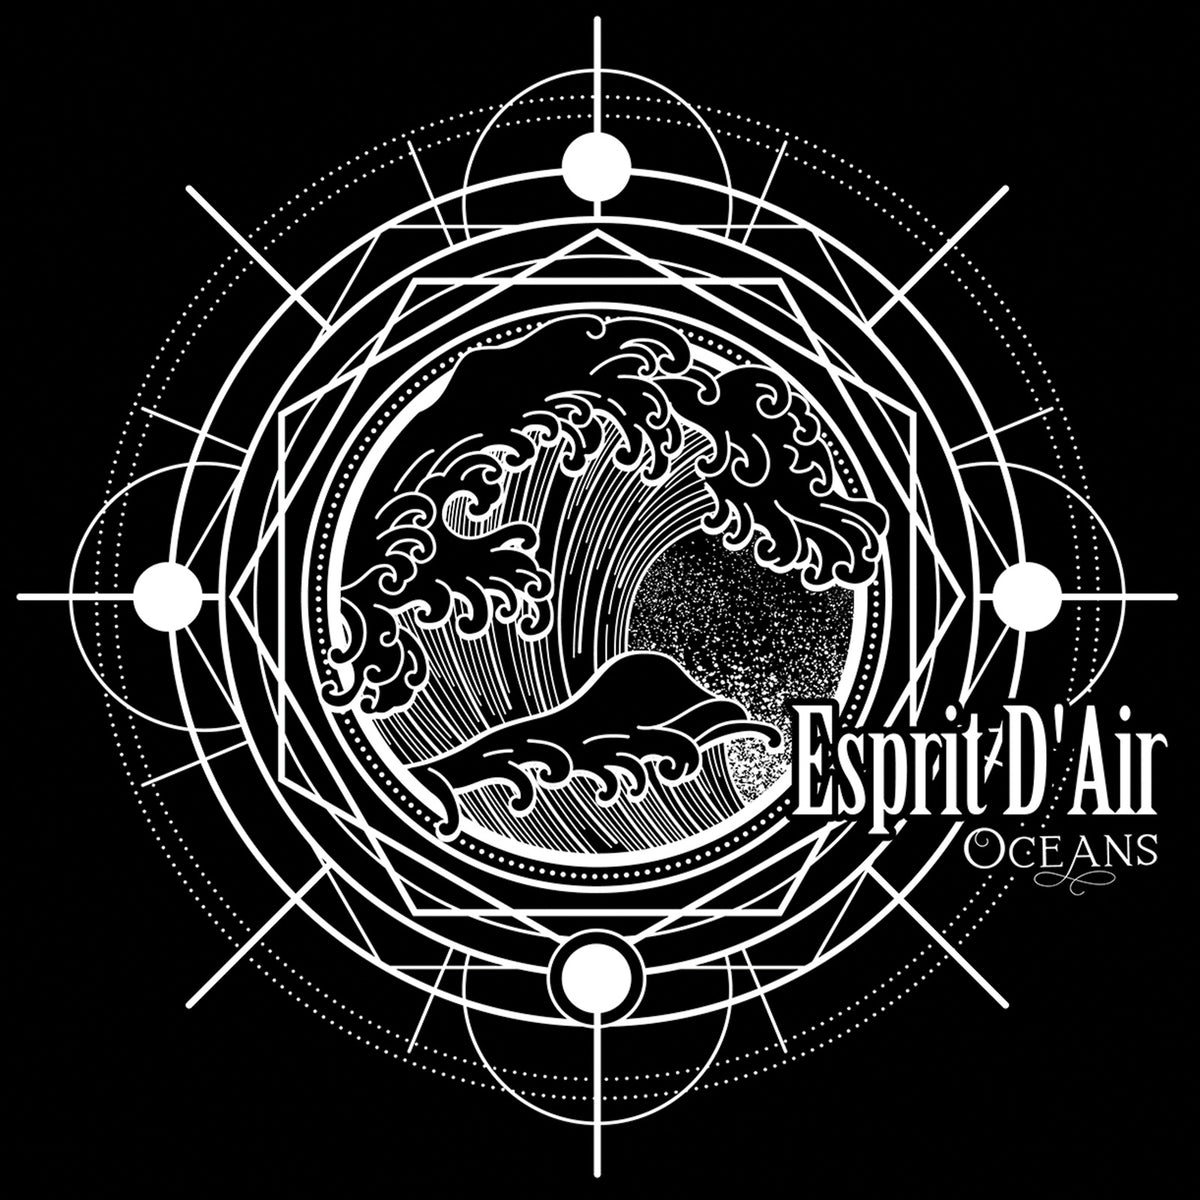 Esprit D'Air - Oceans (Special Edition) - EDA022VN